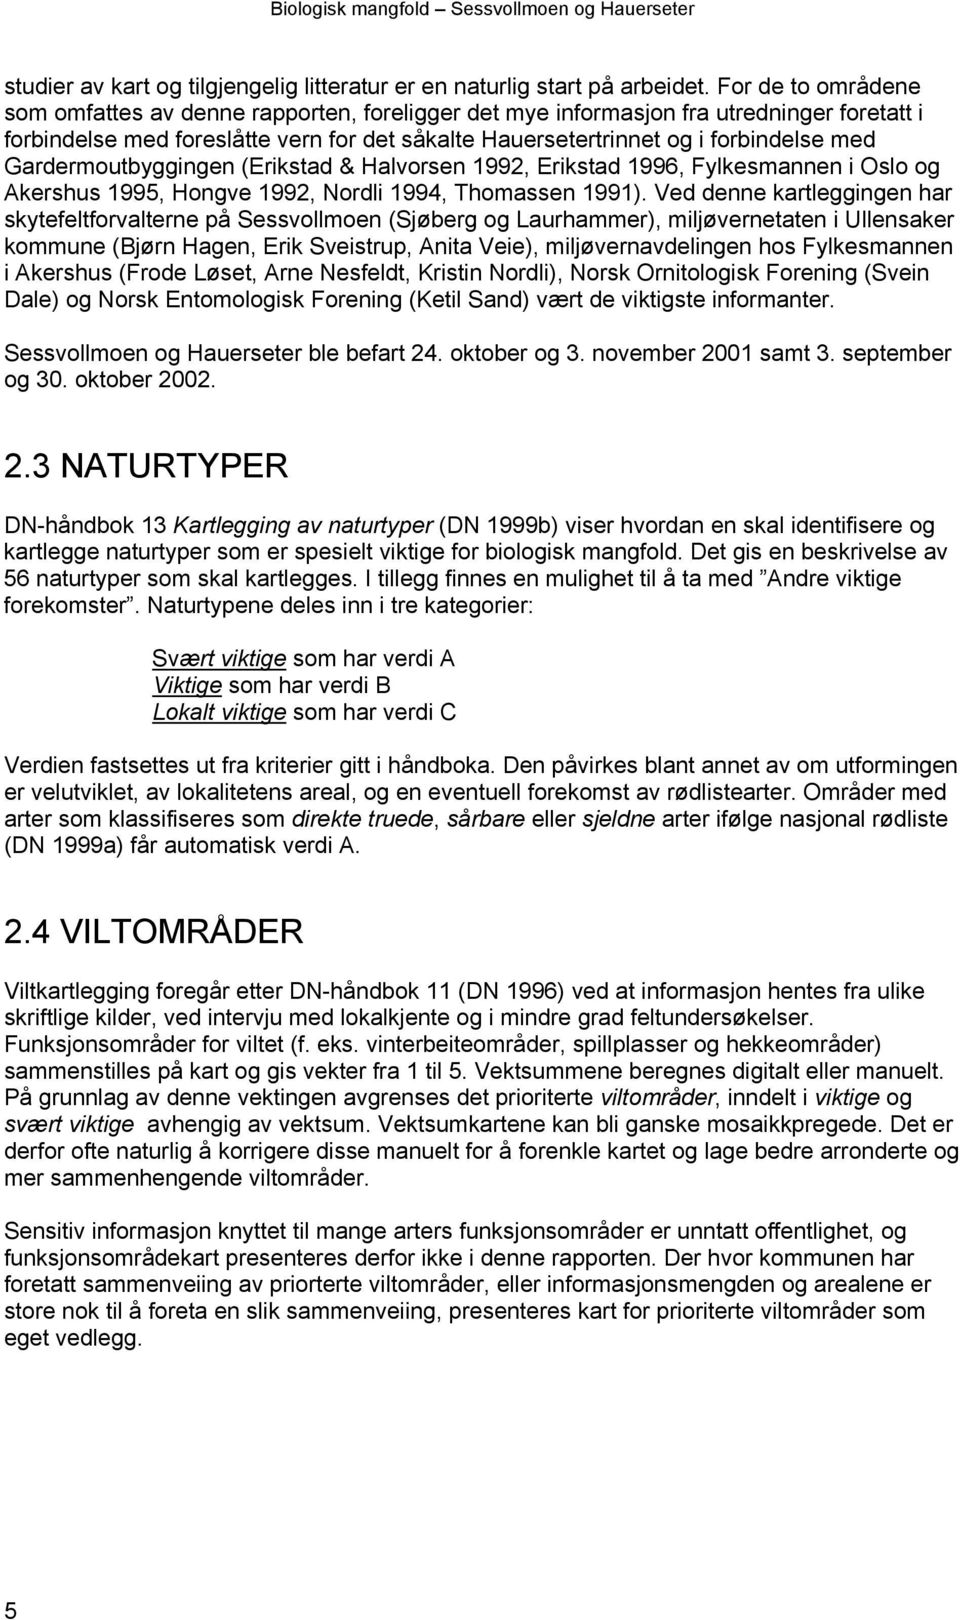 Gardermoutbyggingen (Erikstad & Halvorsen 1992, Erikstad 1996, Fylkesmannen i Oslo og Akershus 1995, Hongve 1992, Nordli 1994, Thomassen 1991).